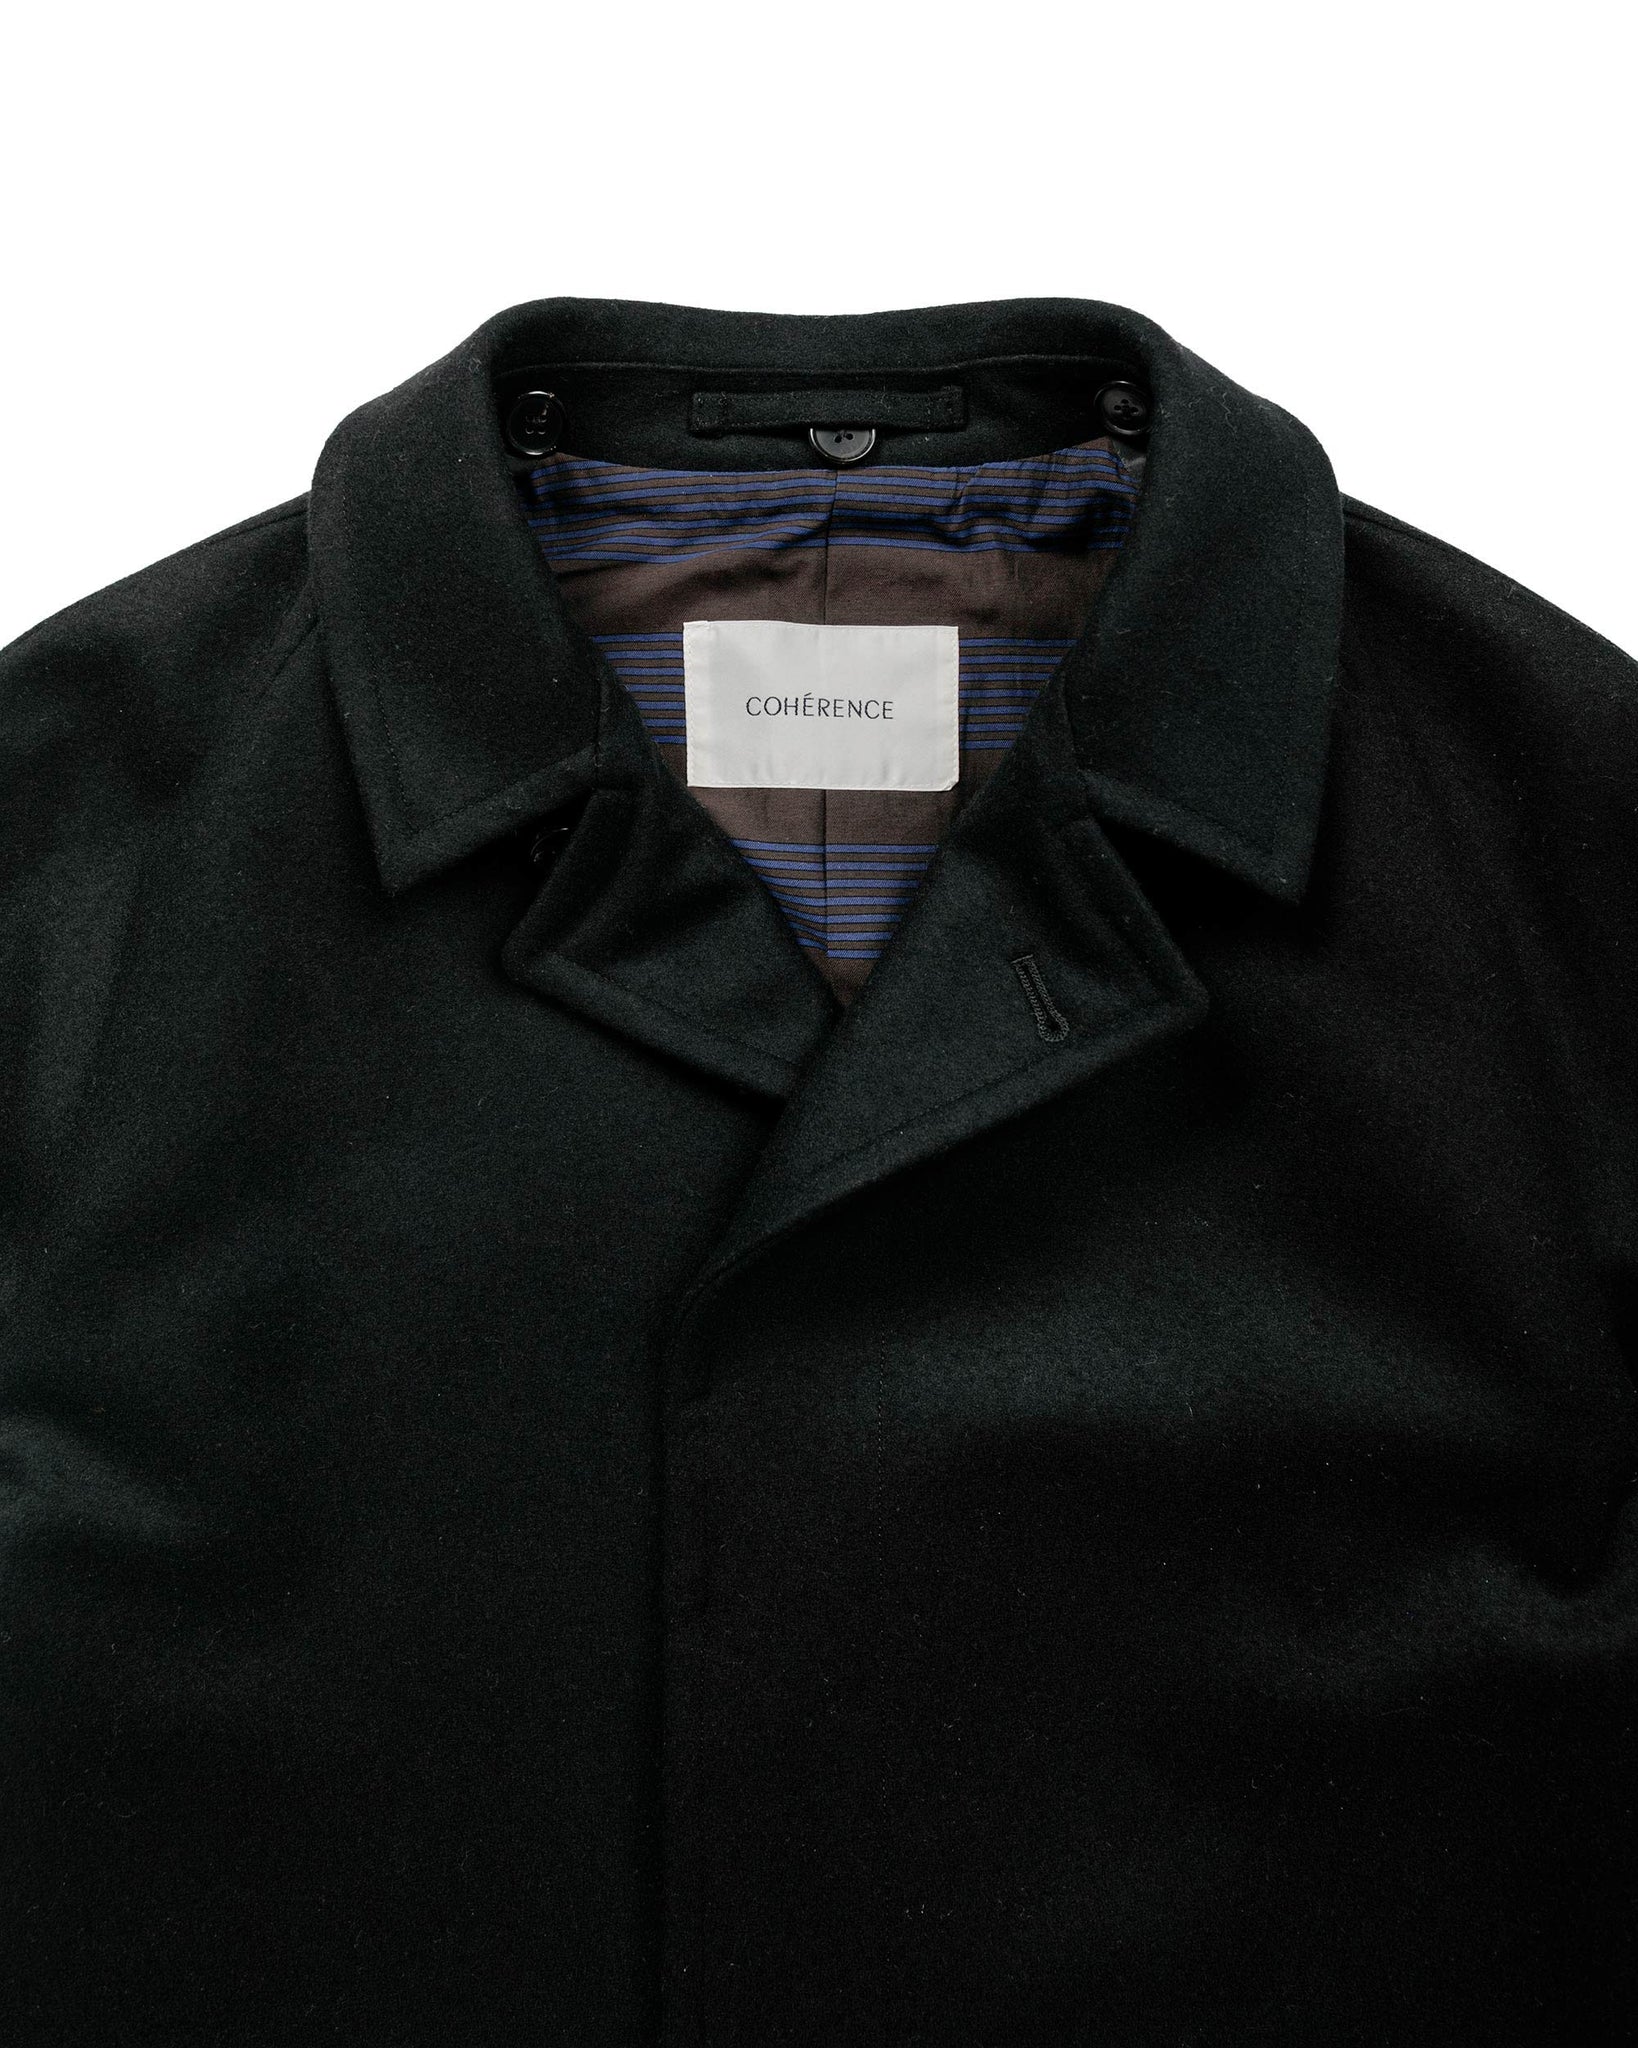 Cohérence Corb Melton Jersey Over Coat Black Collar